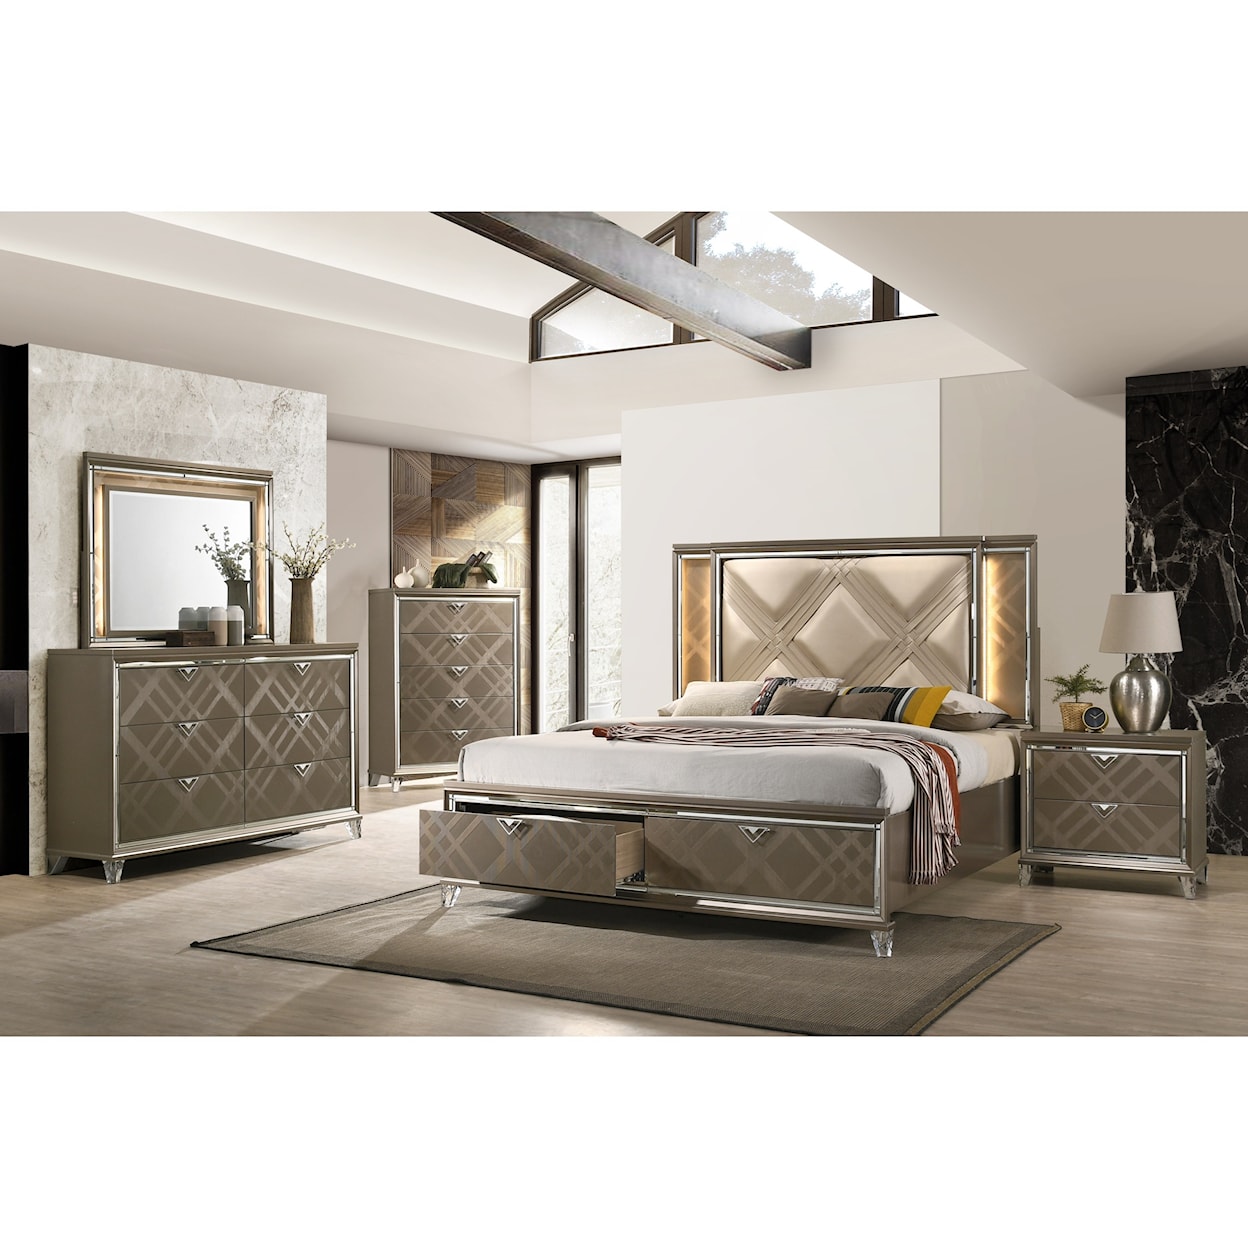 Acme Furniture Skylar King Bedroom Group